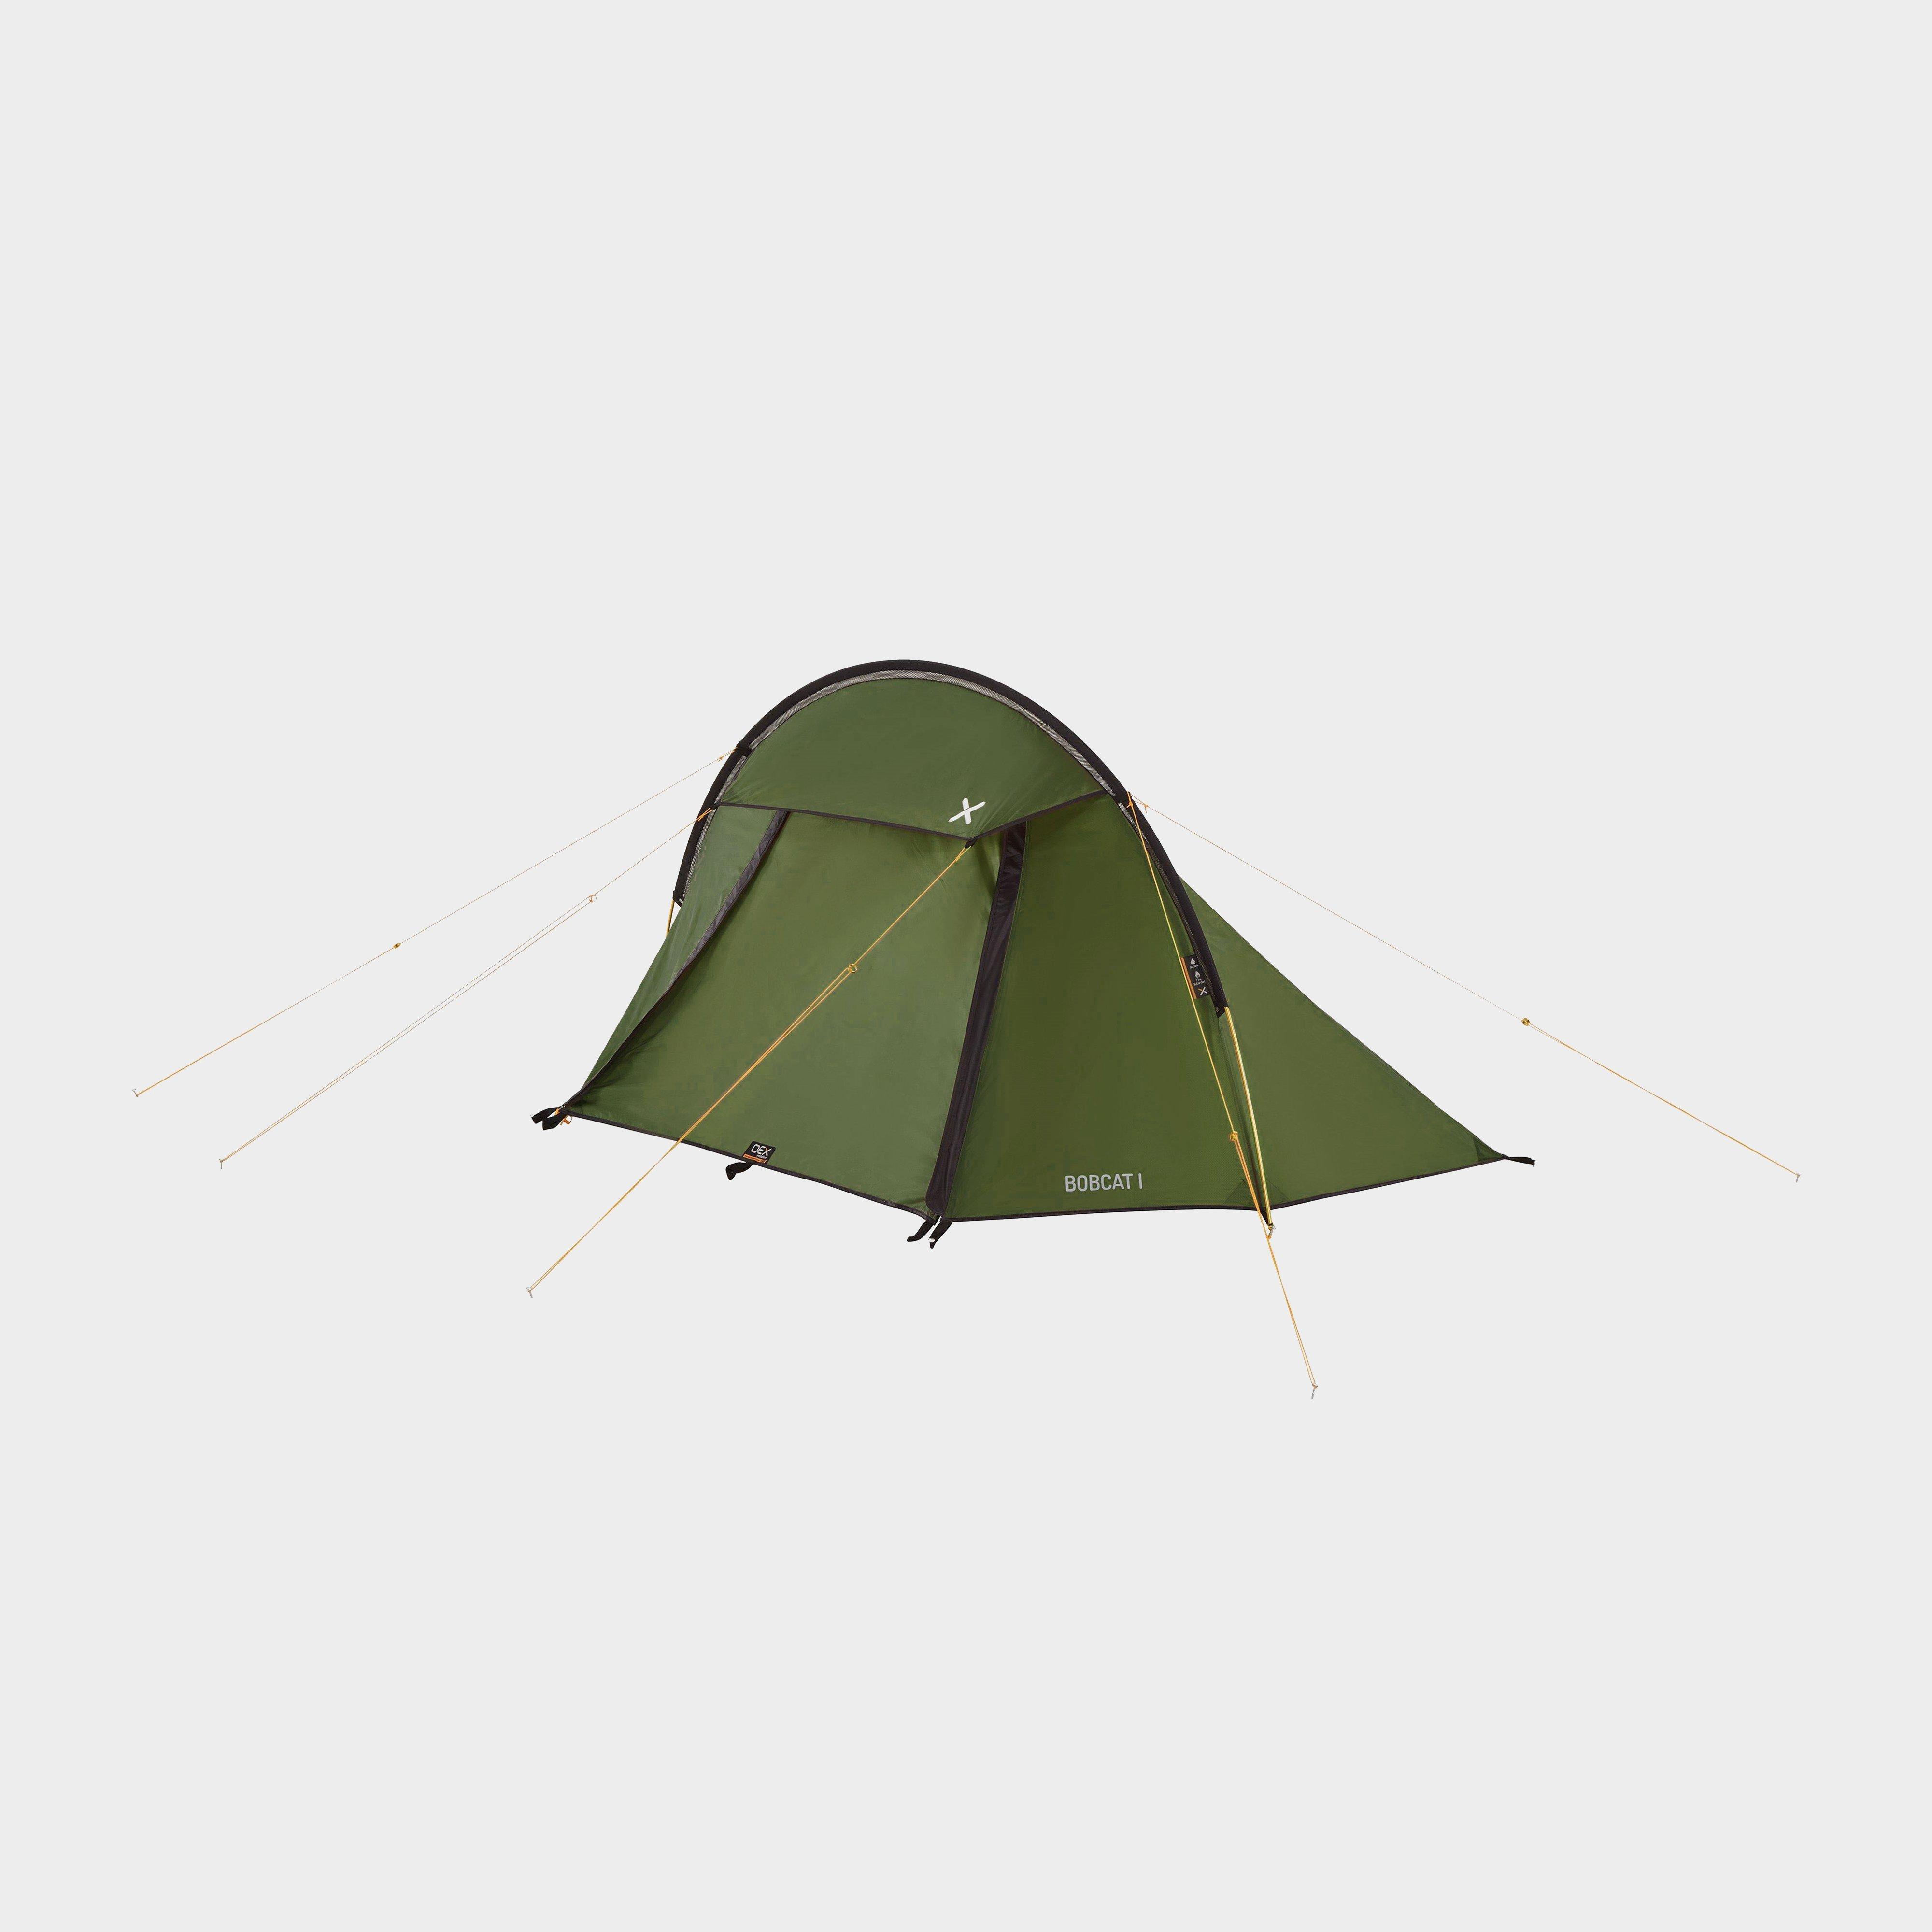 OEX Oex Bobcat 1 Person Tent - Green, Green